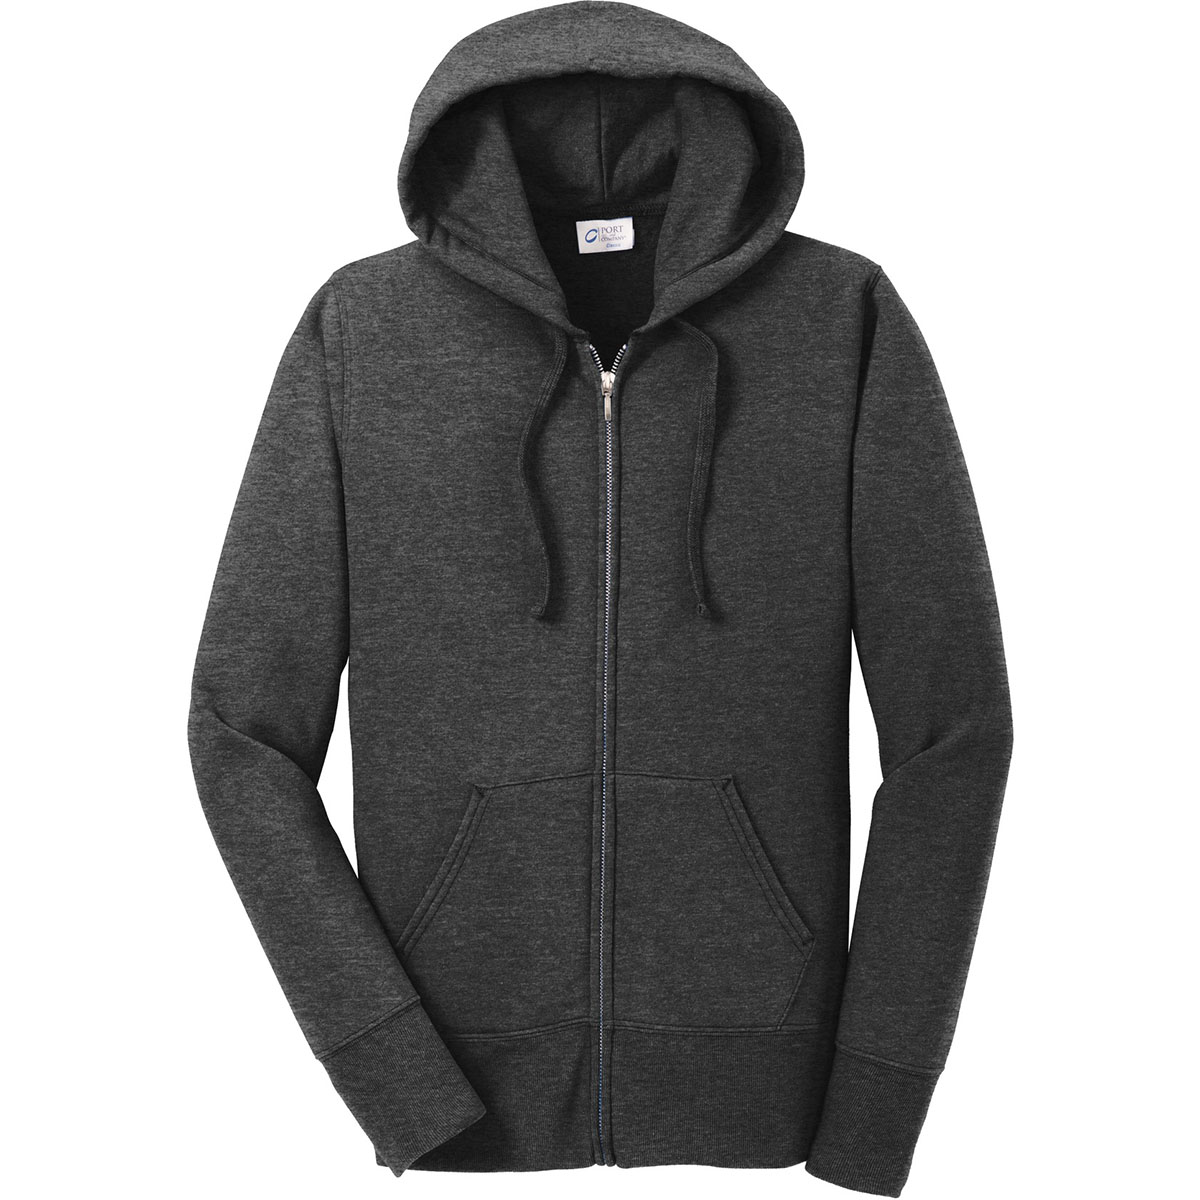 XS-4XL Ladies Core Fleece Full-Zip Hooded Sweatshirts in Sizes